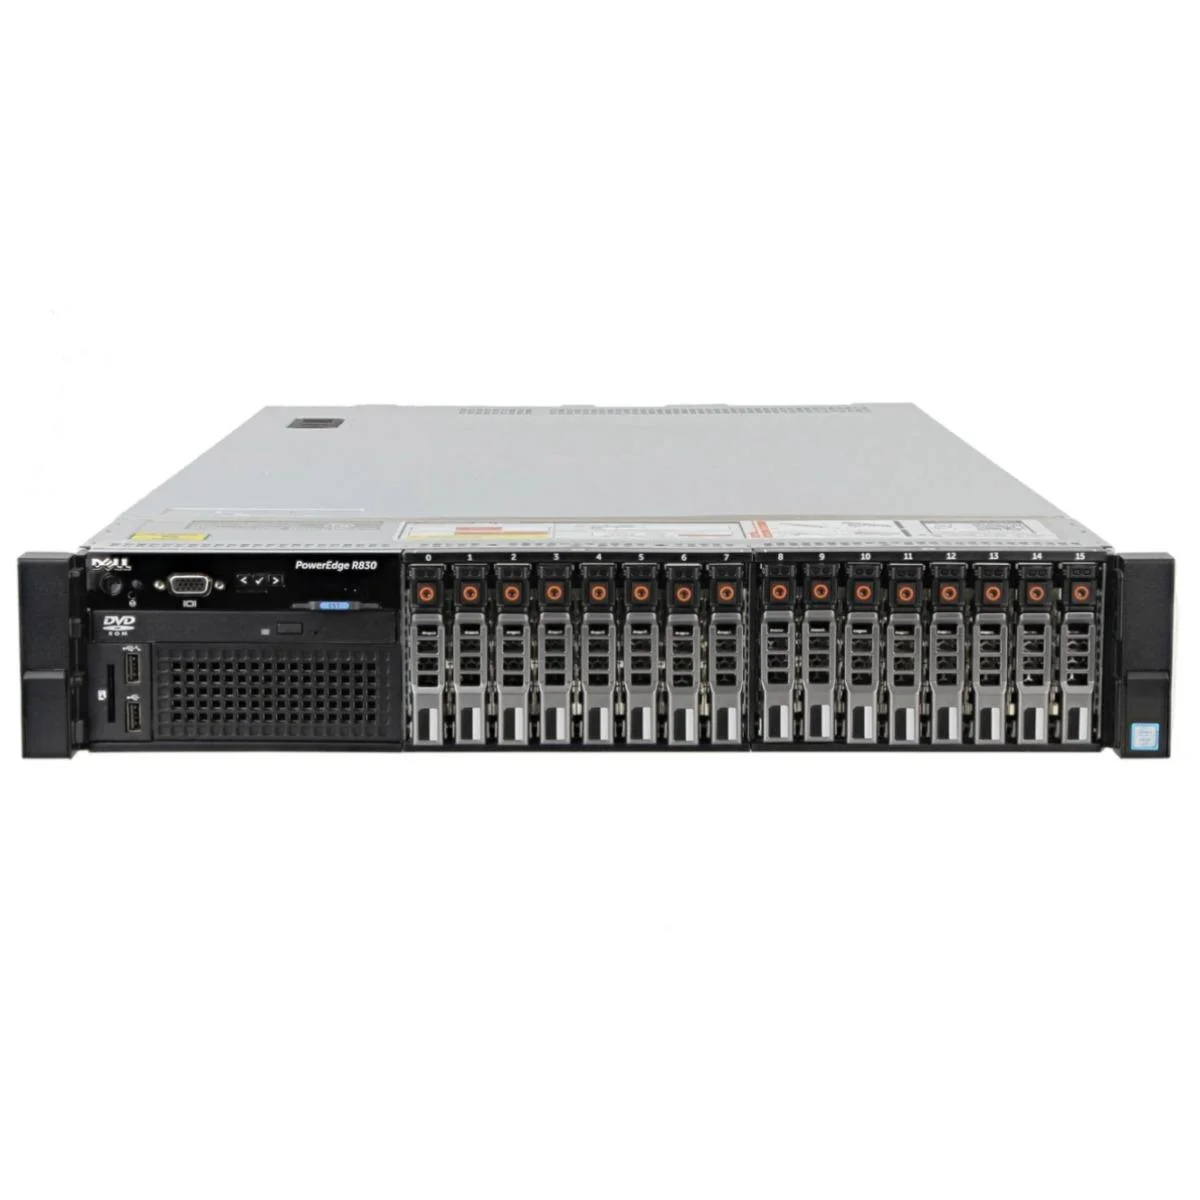 Dell PowerEdge R830 2U Rack Server